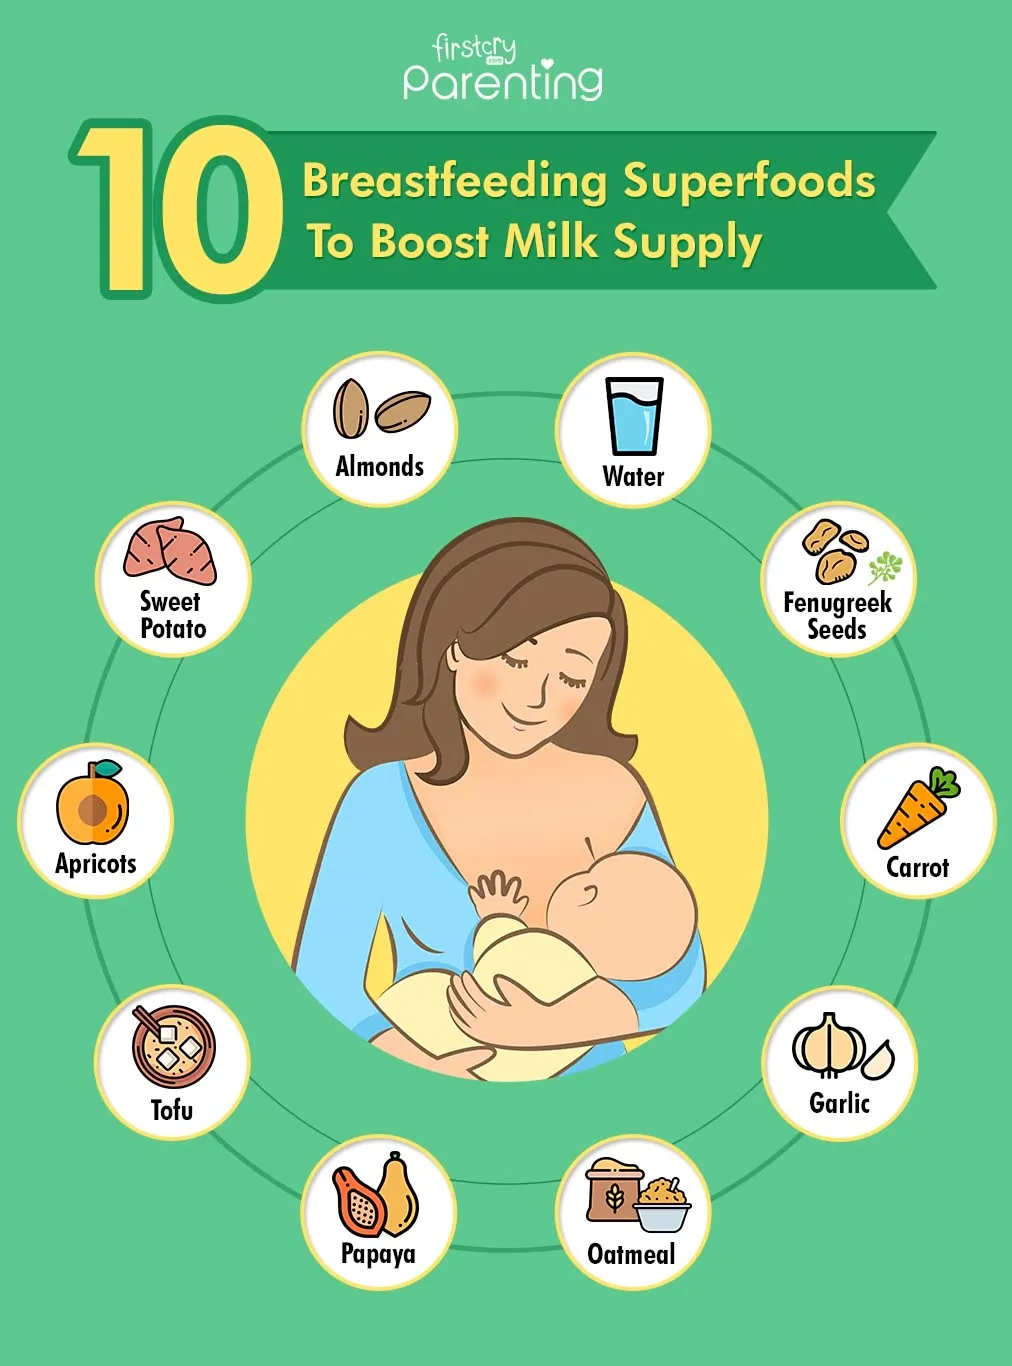 10 Breastfeeding Superfoods to Boost Milk Supply